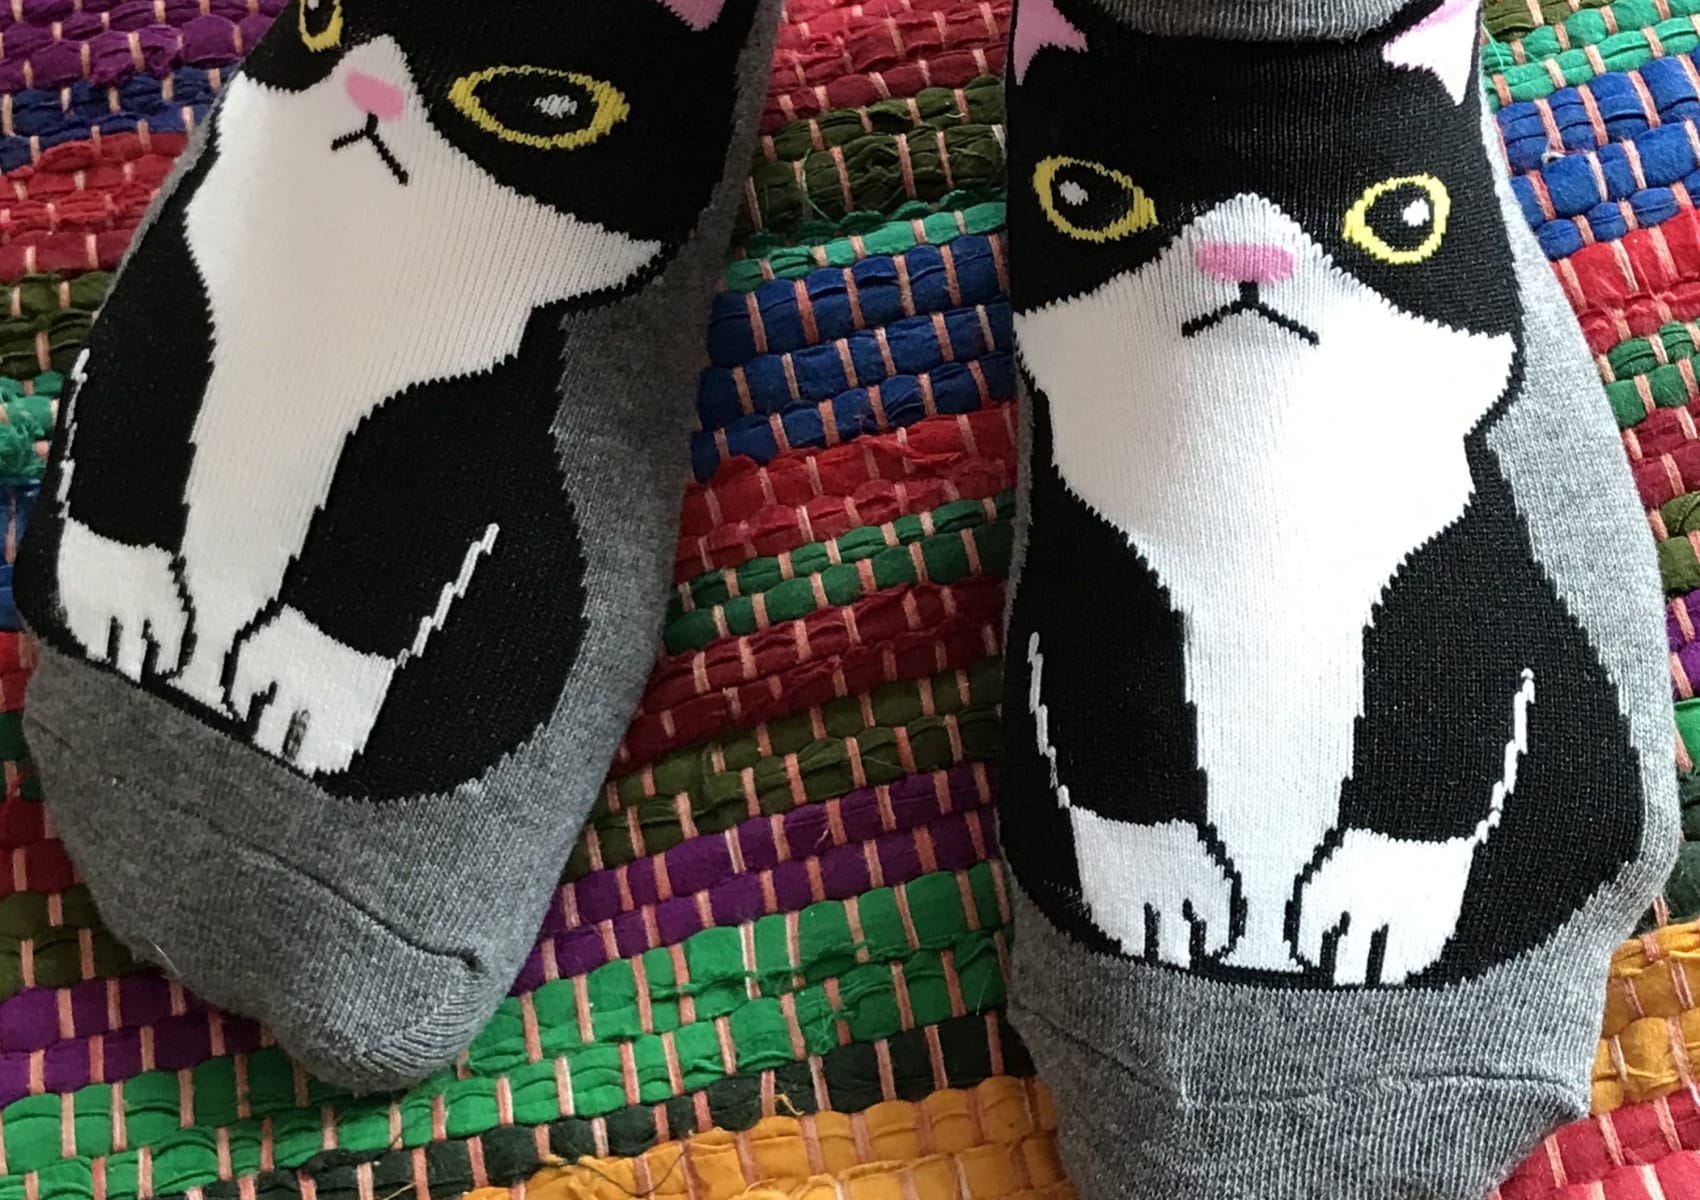 Ladies' dark grey ankle socks with black and white tuxedo cat